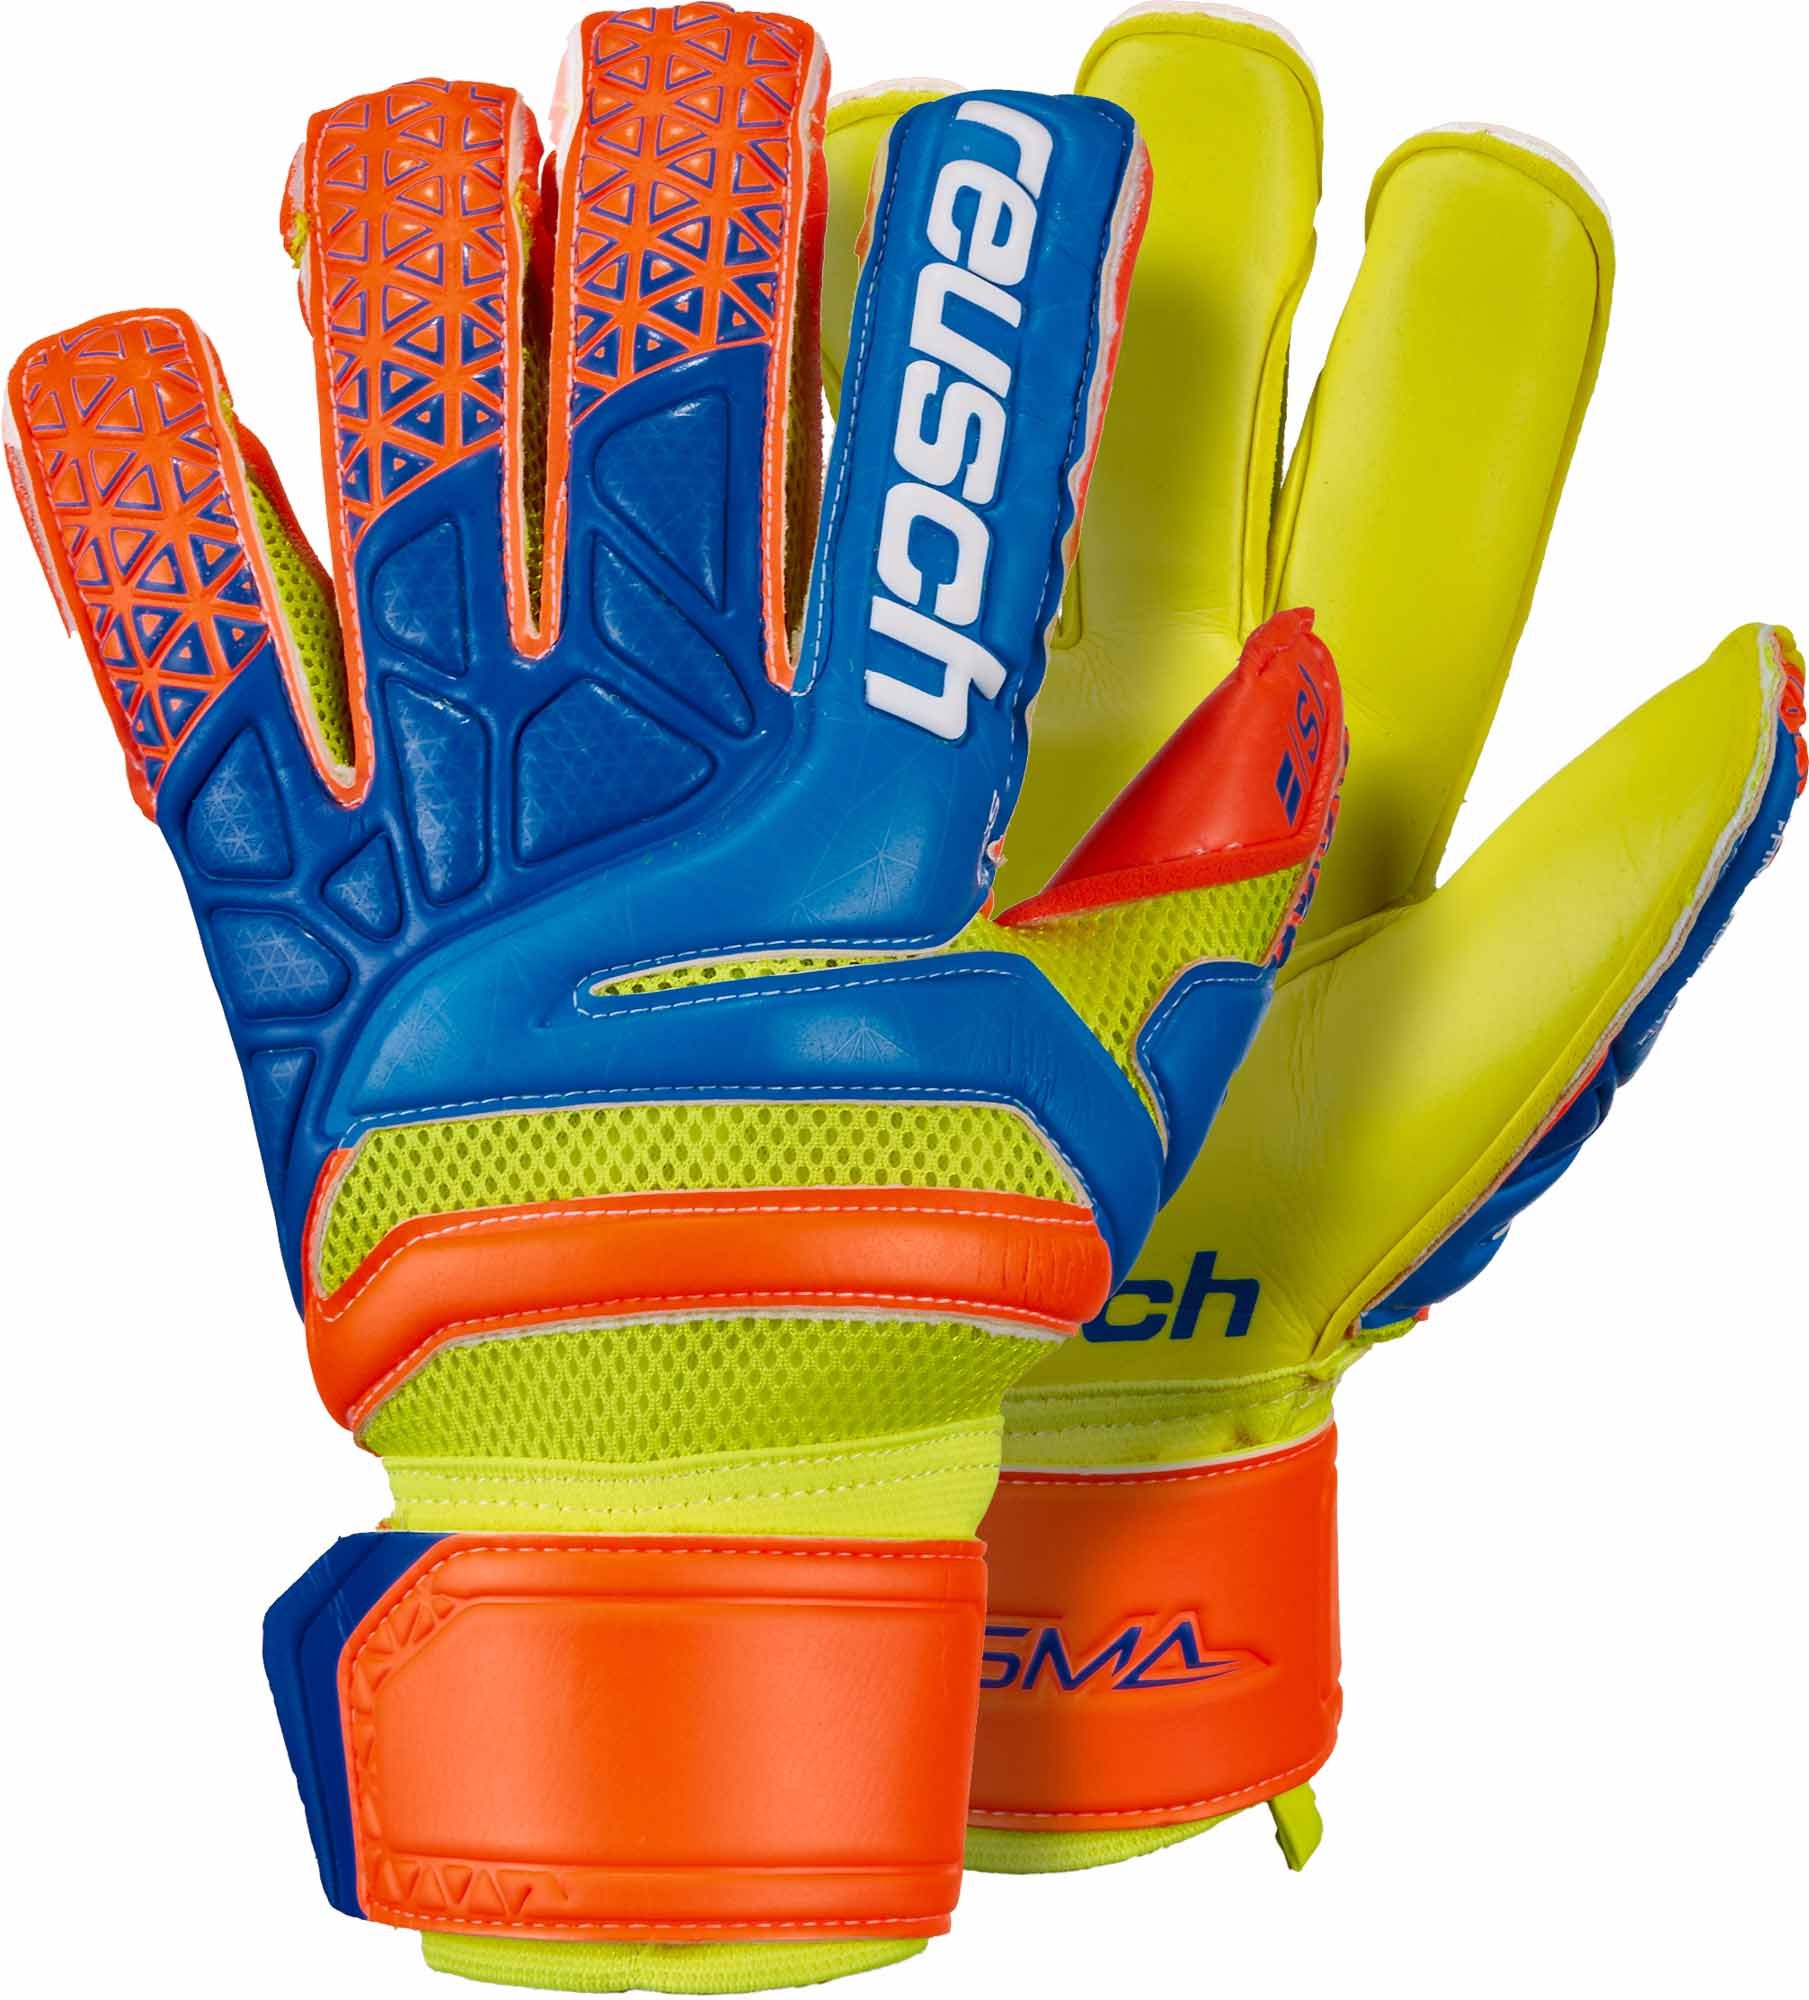 Reusch Prisma Prime S1 Evolution Finger Support - Goalkeeper Gloves